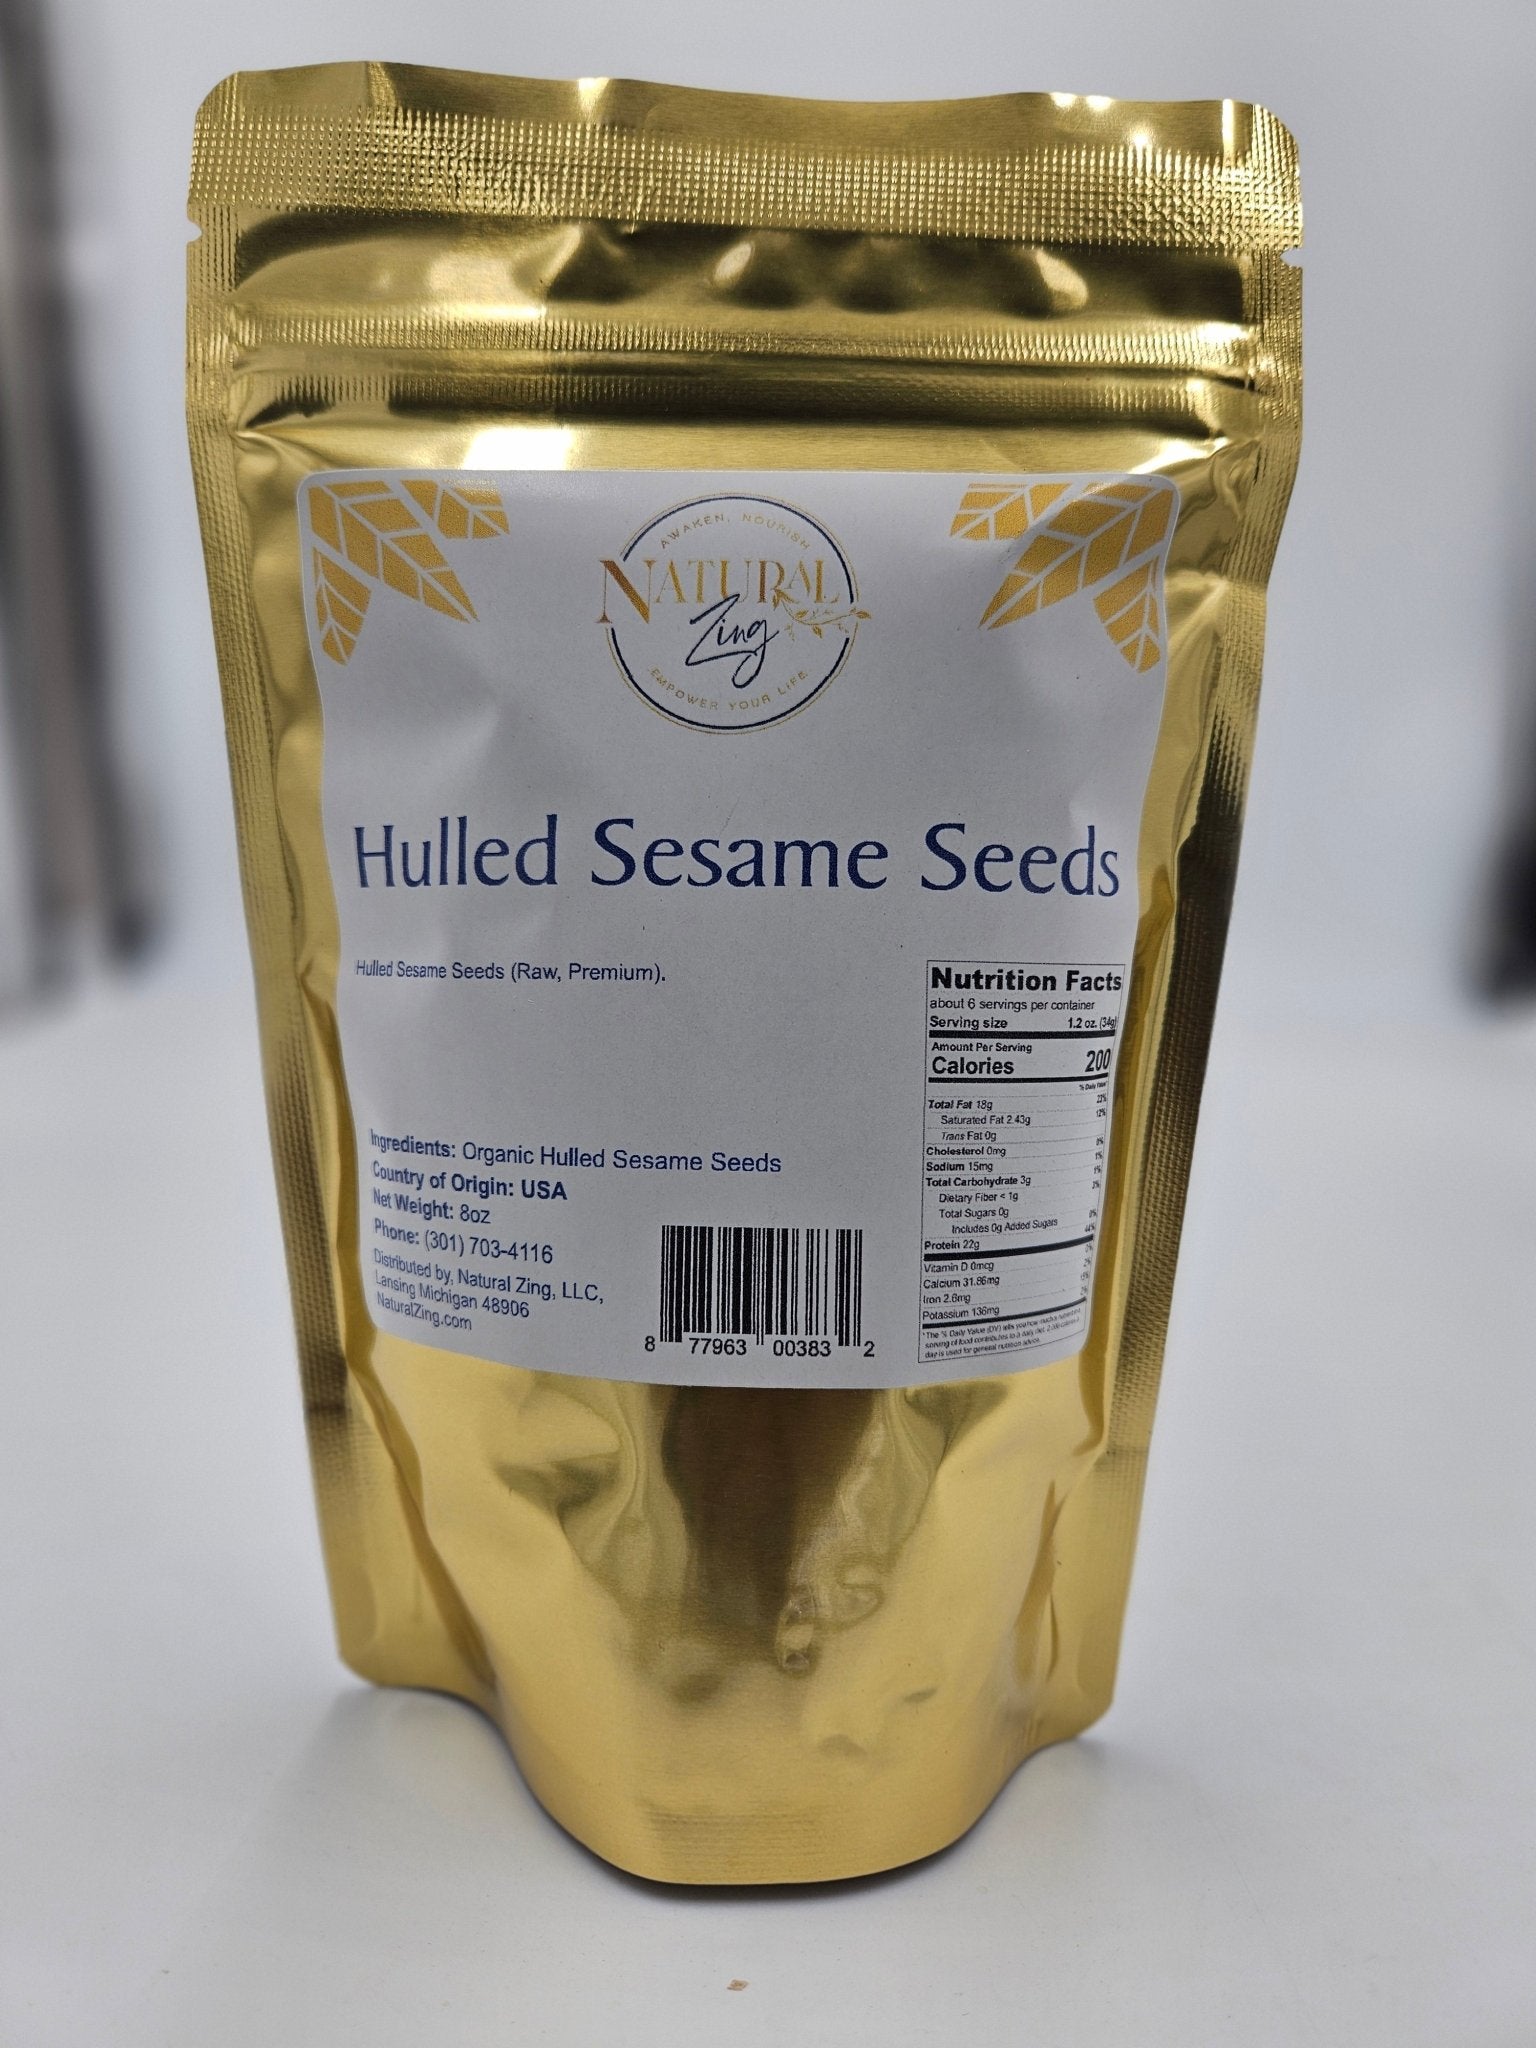 Sesame Seeds (hulled) 8 oz - Natural Zing